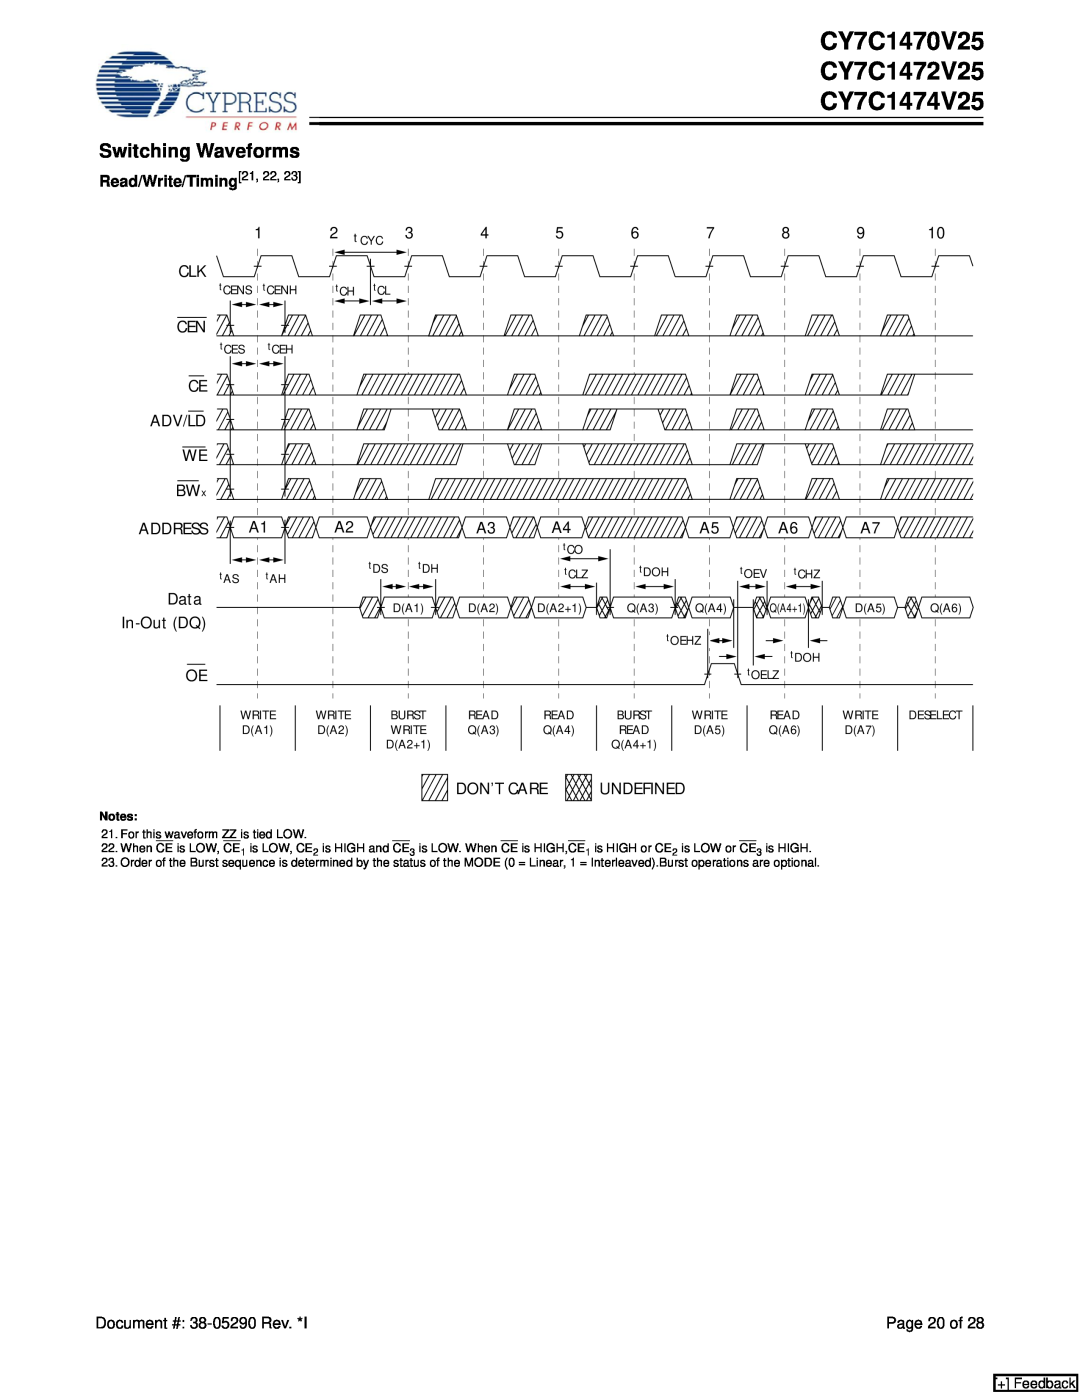 Cypress manual Switching Waveforms, CY7C1470V25 CY7C1472V25 CY7C1474V25, Read/Write/Timing21, 22 